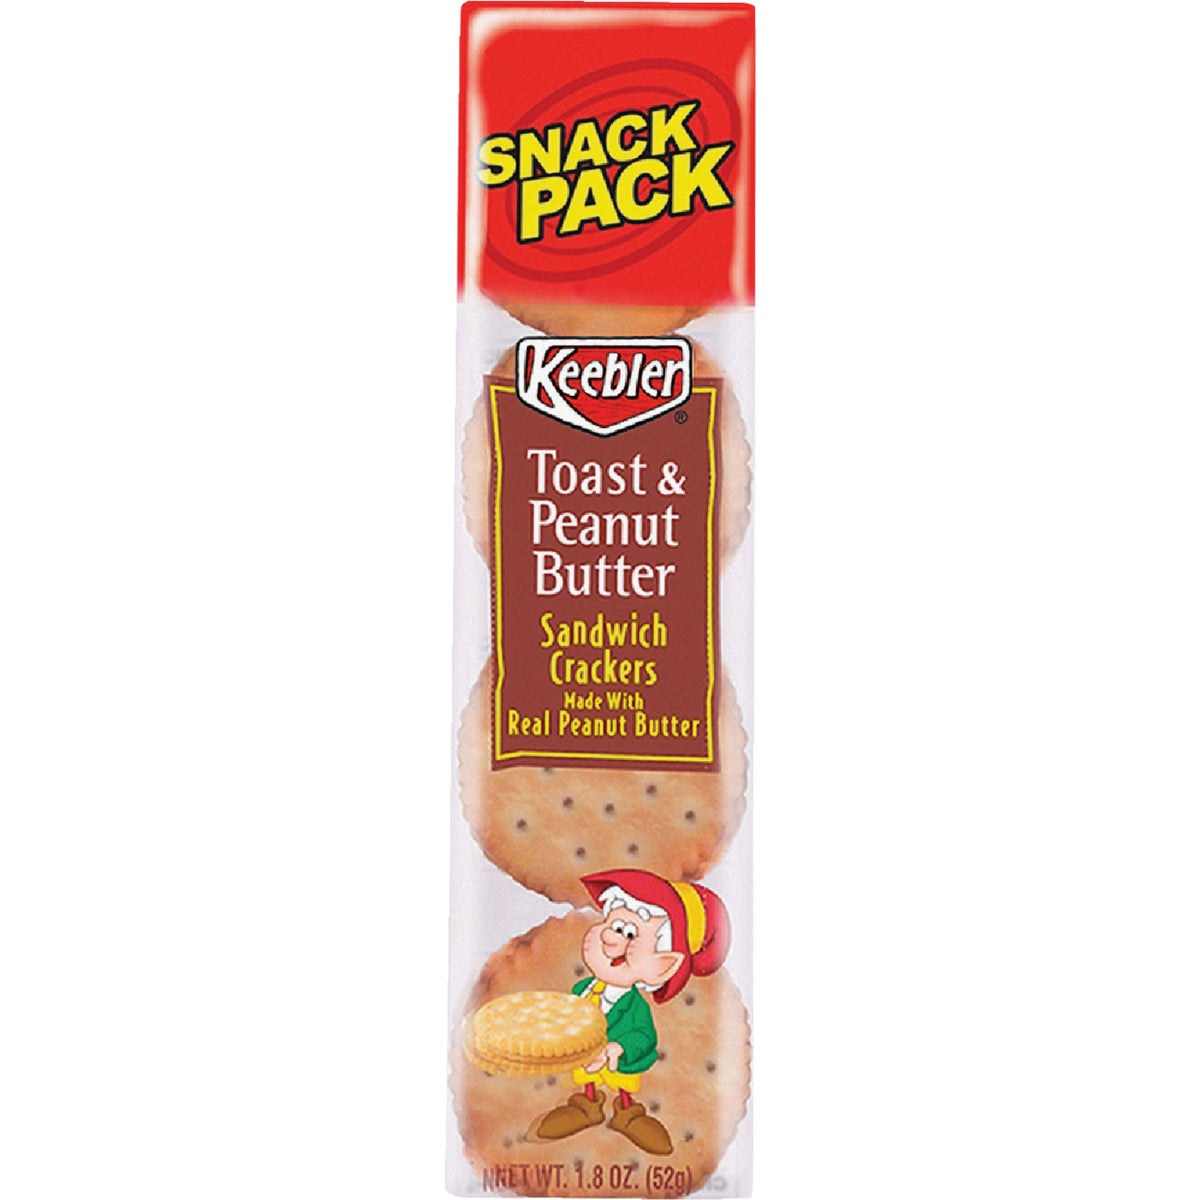 Item 970607, Keebler toast &amp; peanut butter sandwich crackers.